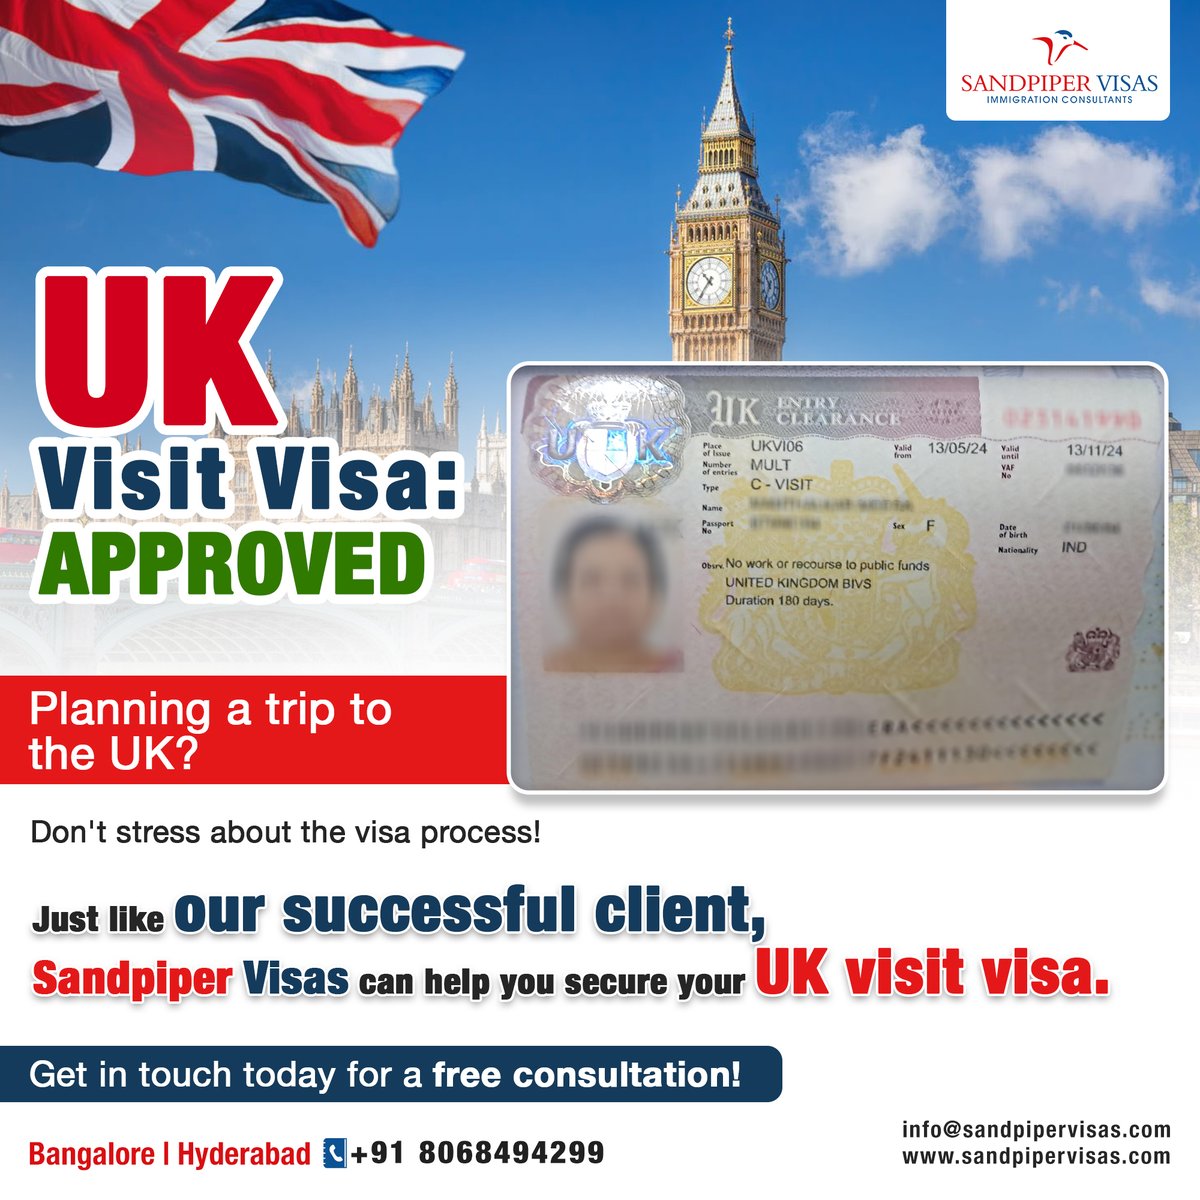 Ready for an adventure in the UK? Let Sandpiper Visas handle your visa process. 
☎️+91 8068494299
sandpipervisas.com
#SandpiperVisas #Sandpiper #SuccessStories #UKVisa #TravelApproved #VisaSuccess  #VisaConsultation #TravelPlans #UKTrip #VisaExperts #BengaluruAgents